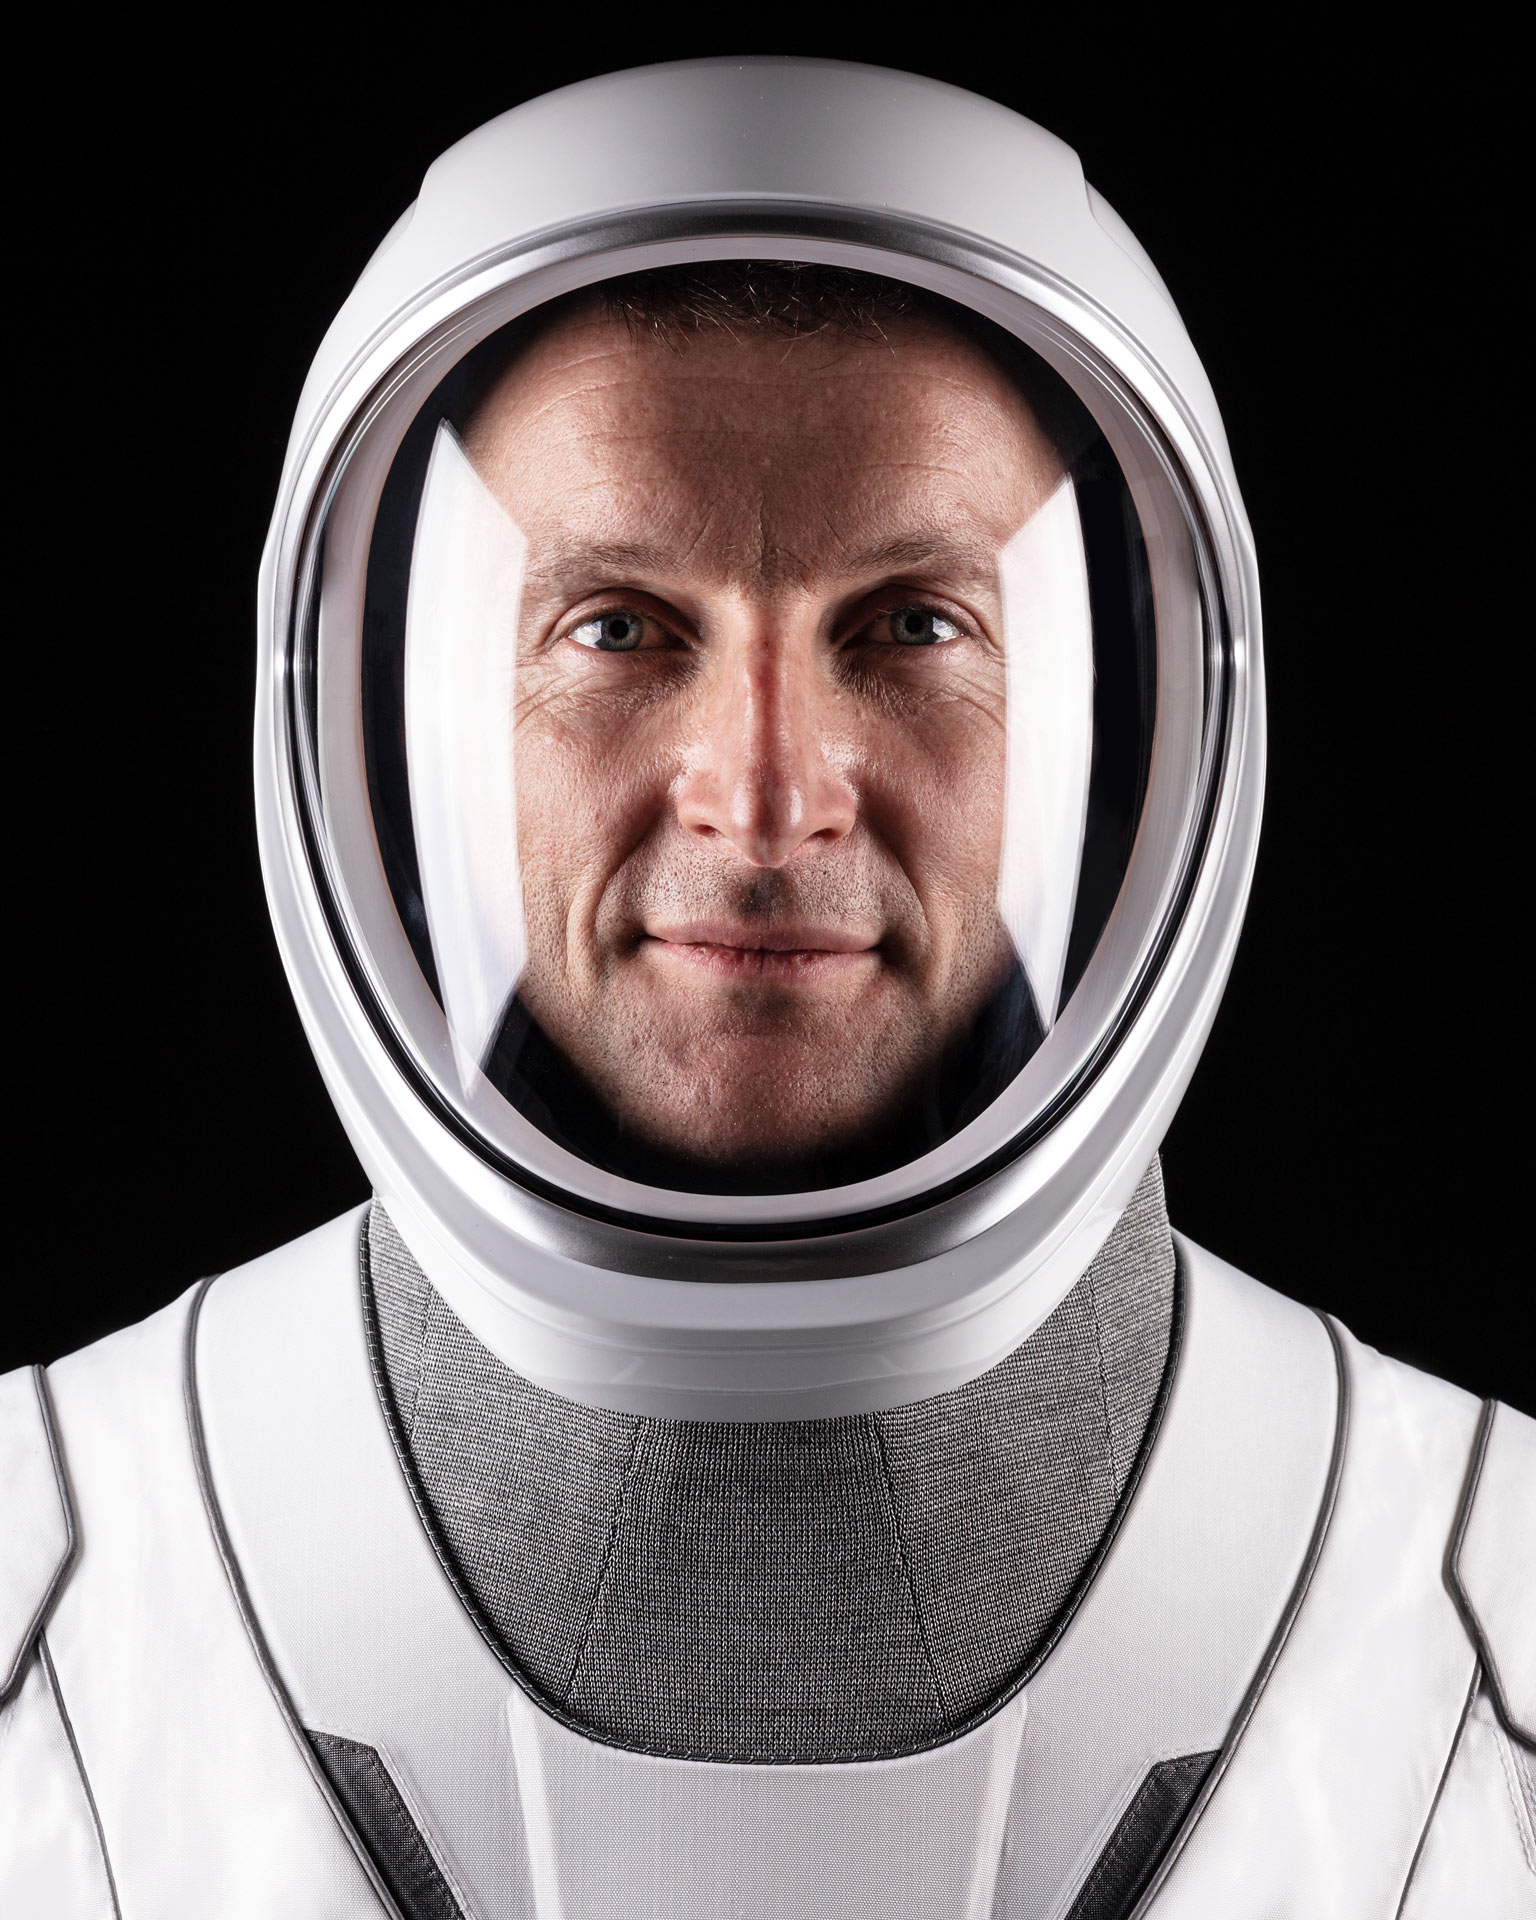 ESA Astronaut Matthias Maurer